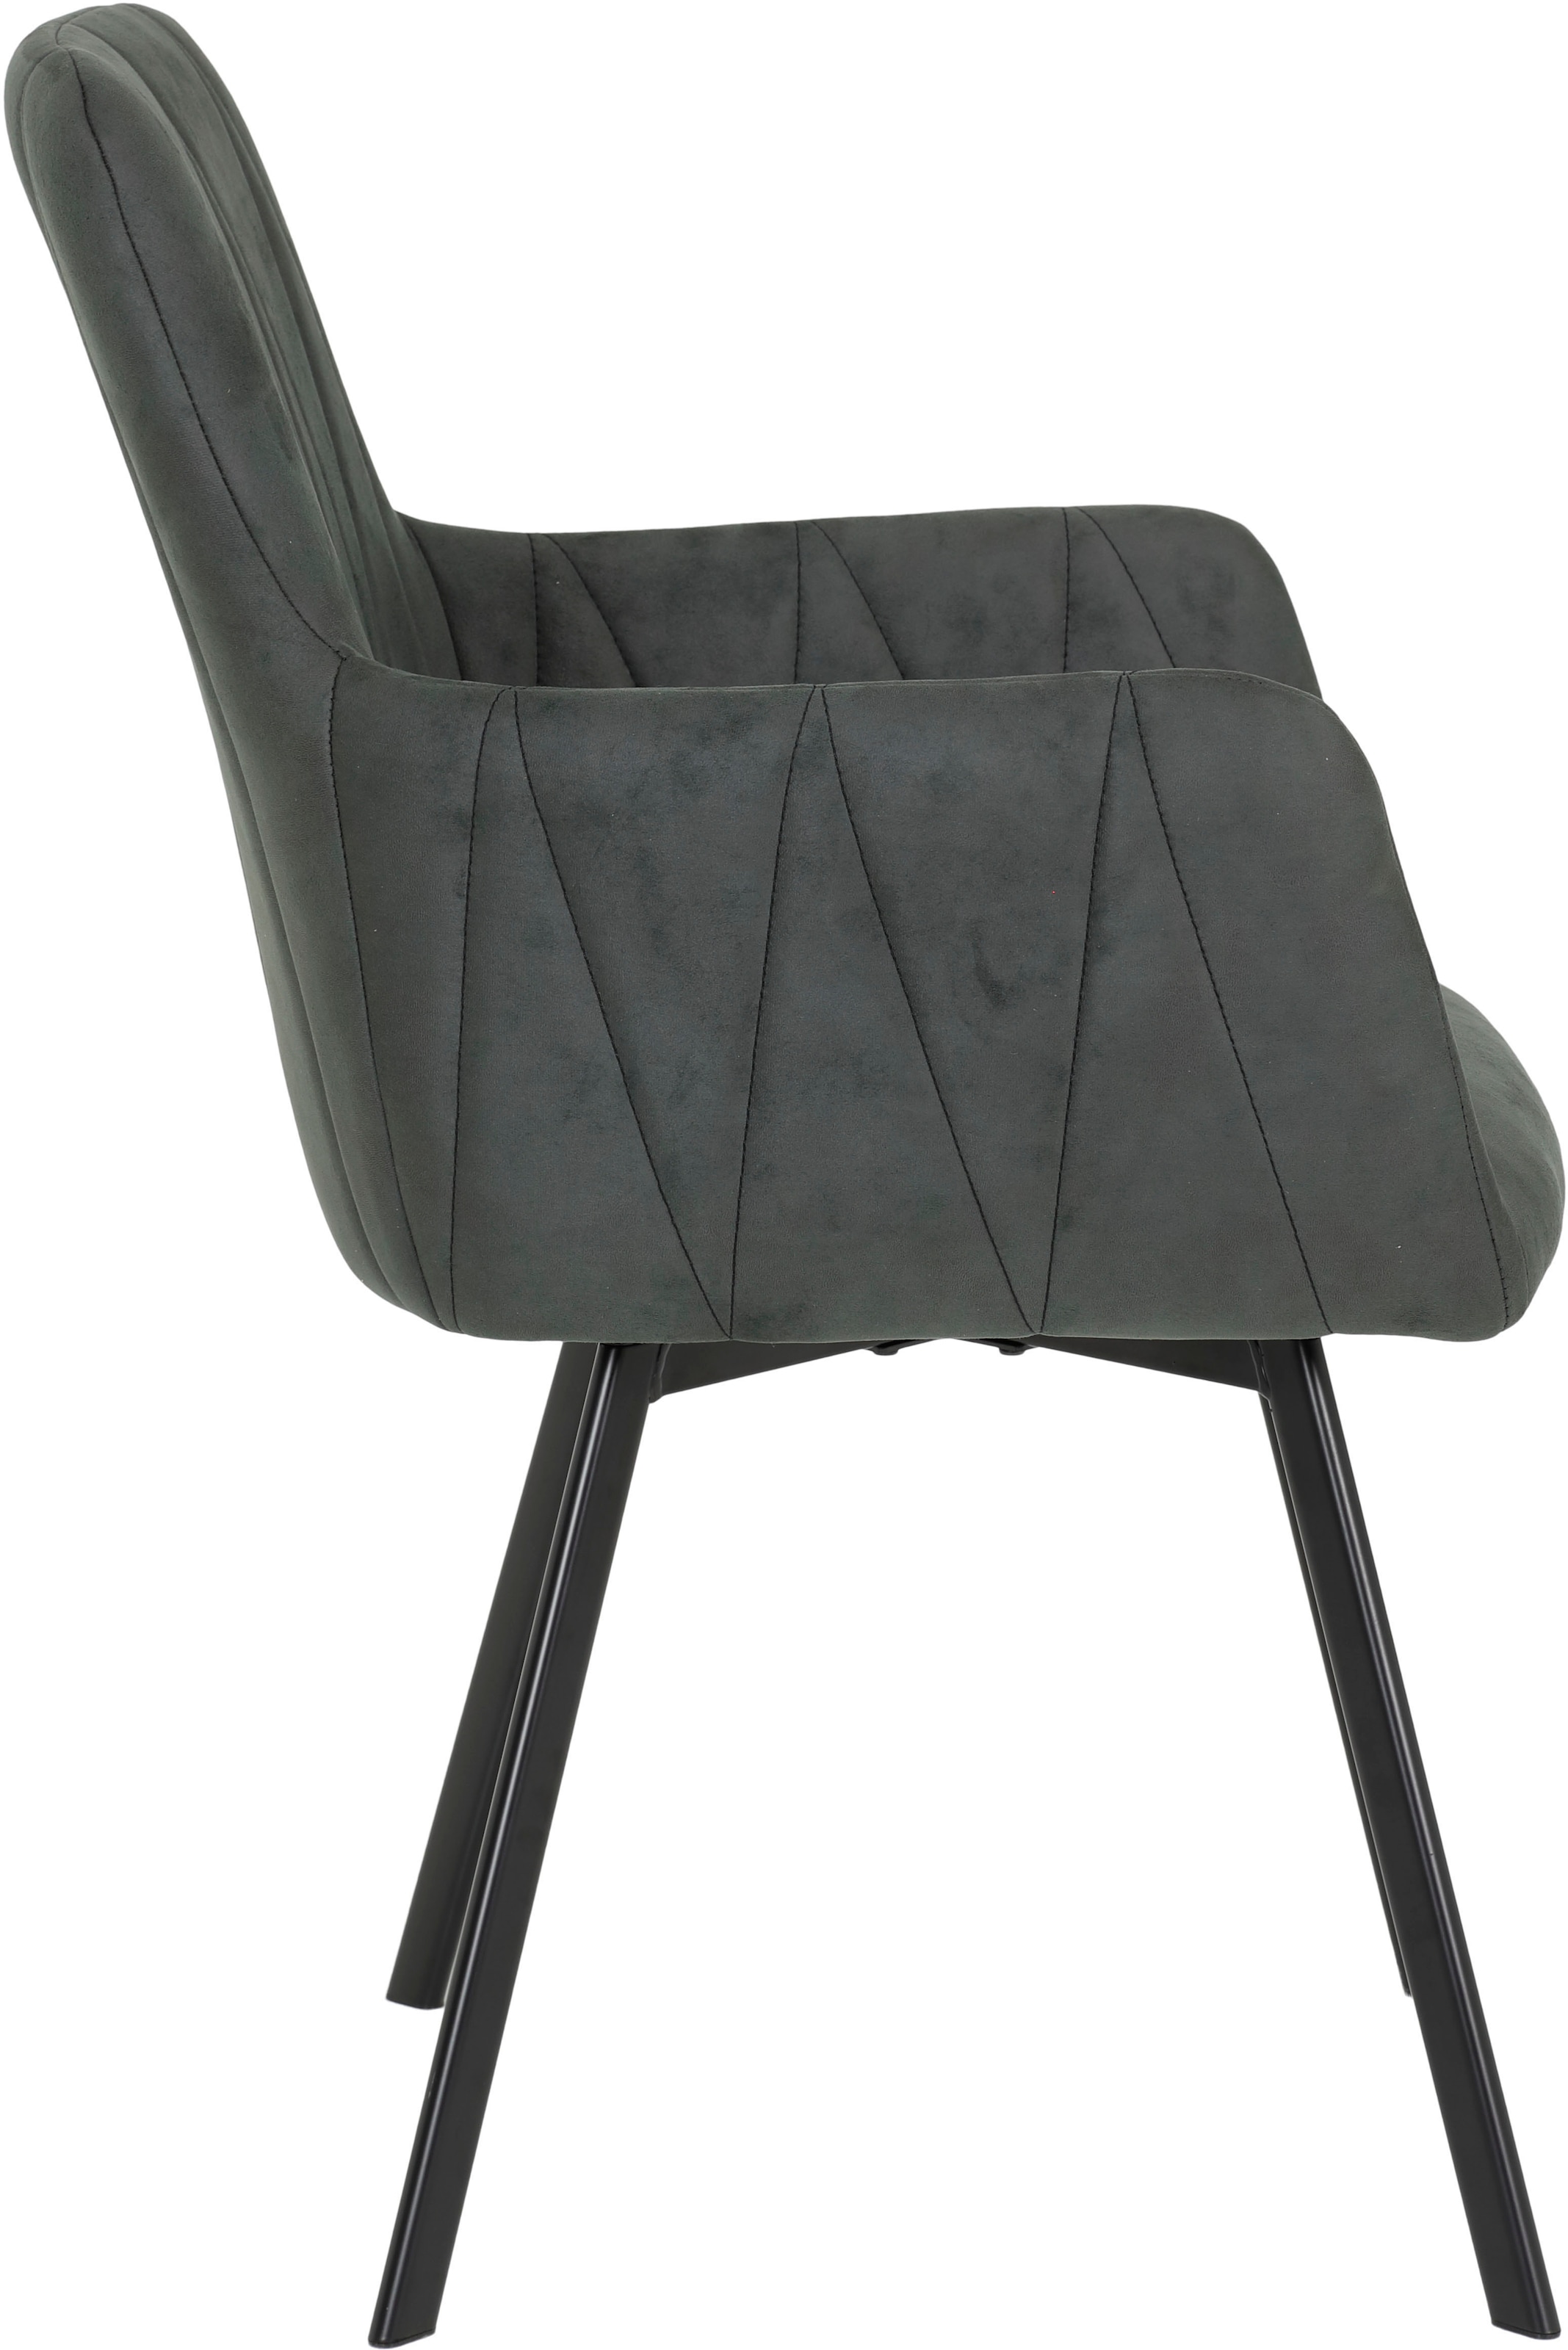 HELA Essgruppe »Karina«, (Set, 5 - drehbar tlg.), 200 kaufen Sessel Ausziehbar 160 cm, 360°